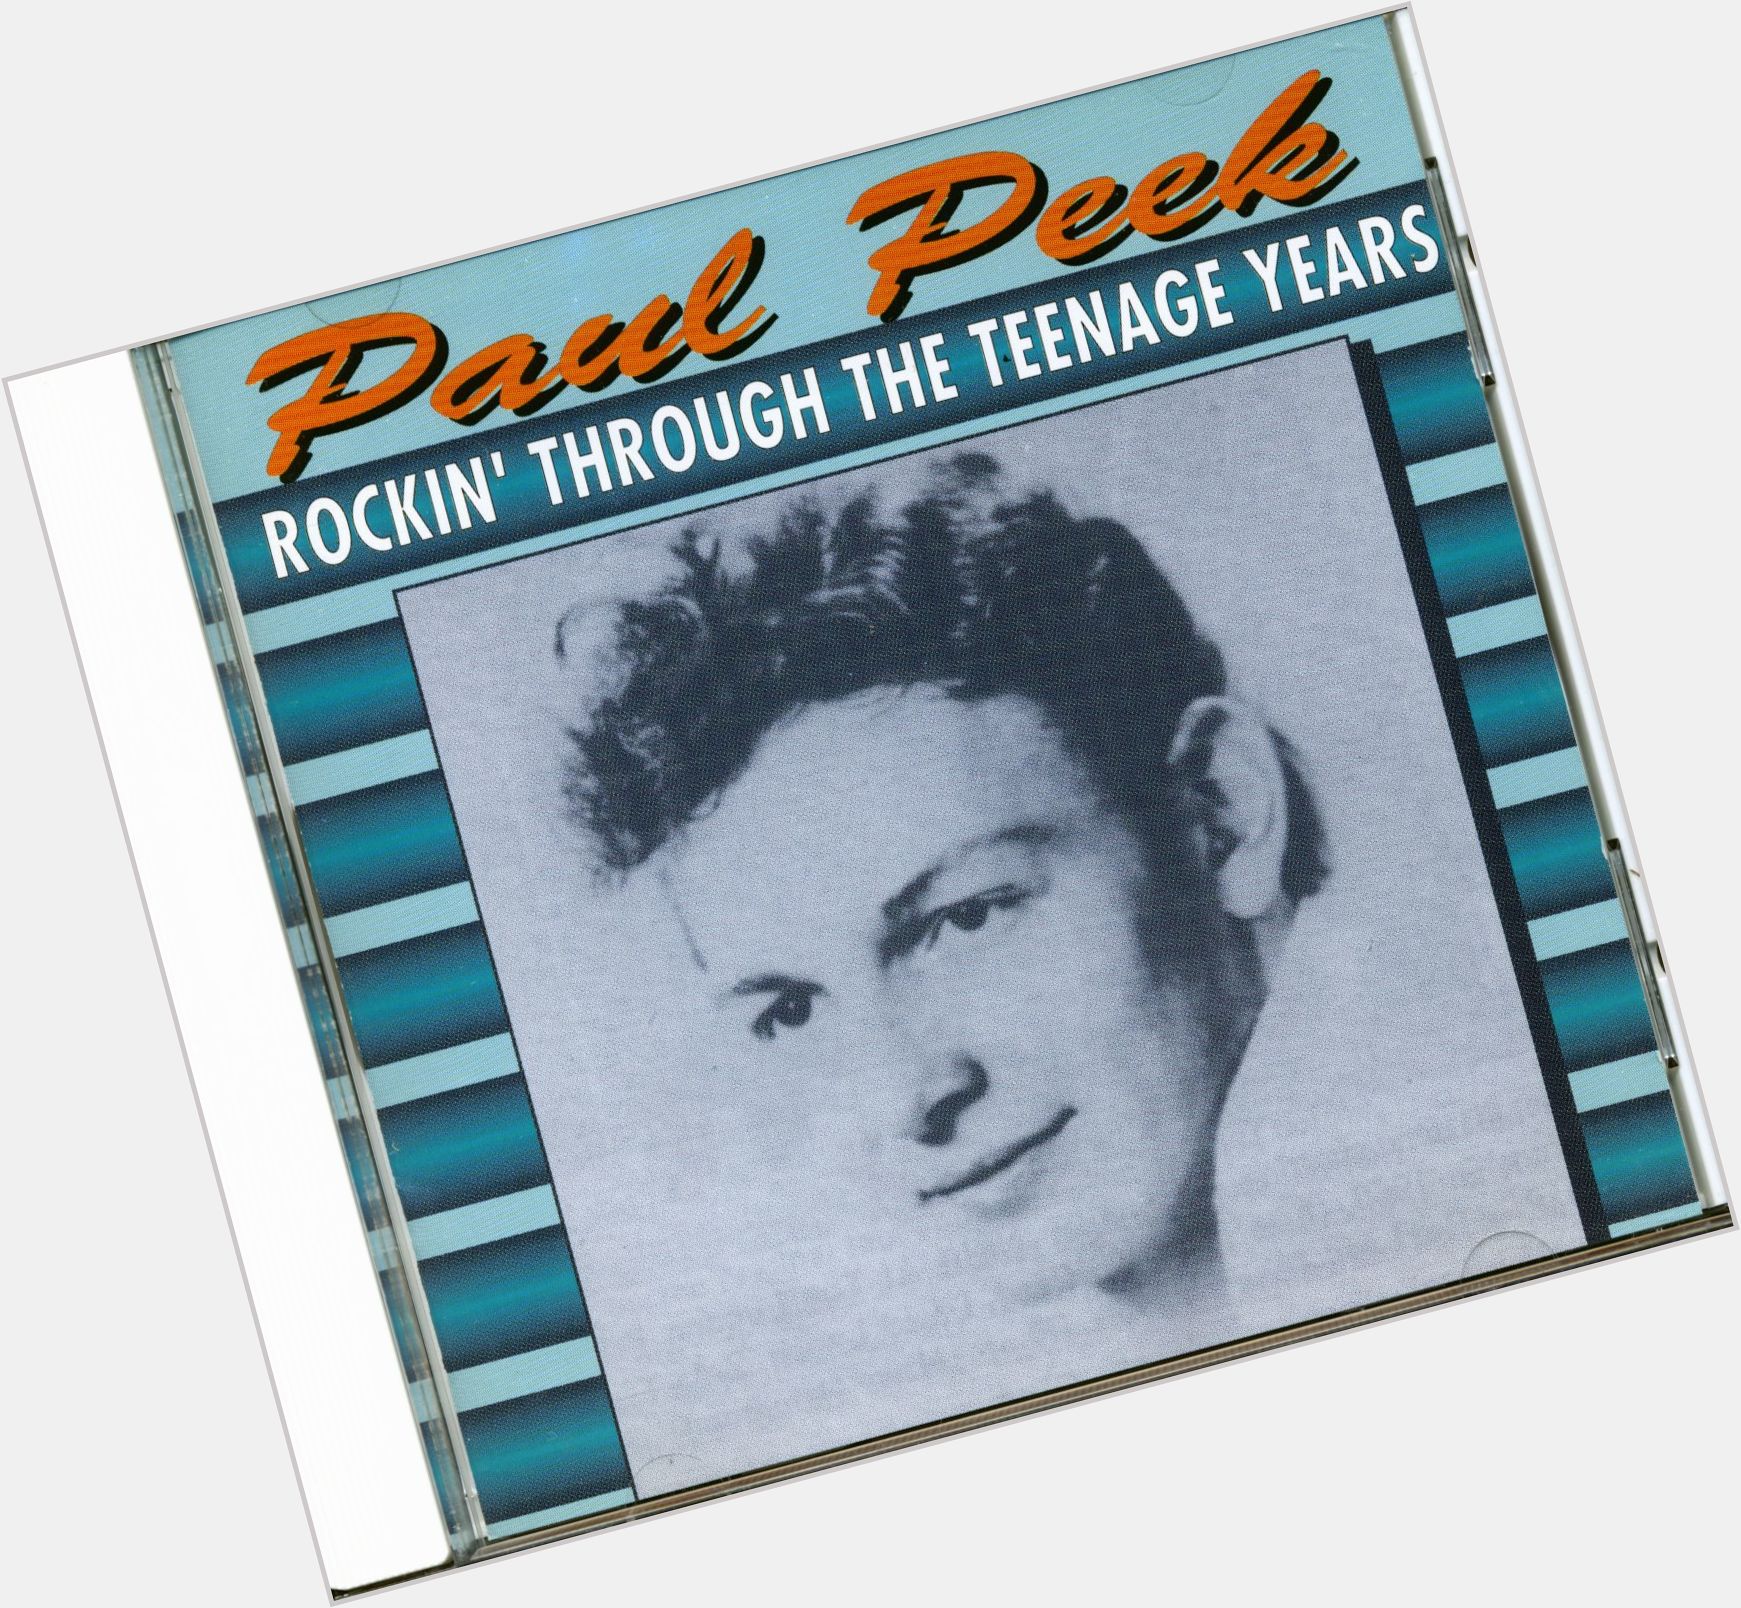 Paul Peek birthday 2015